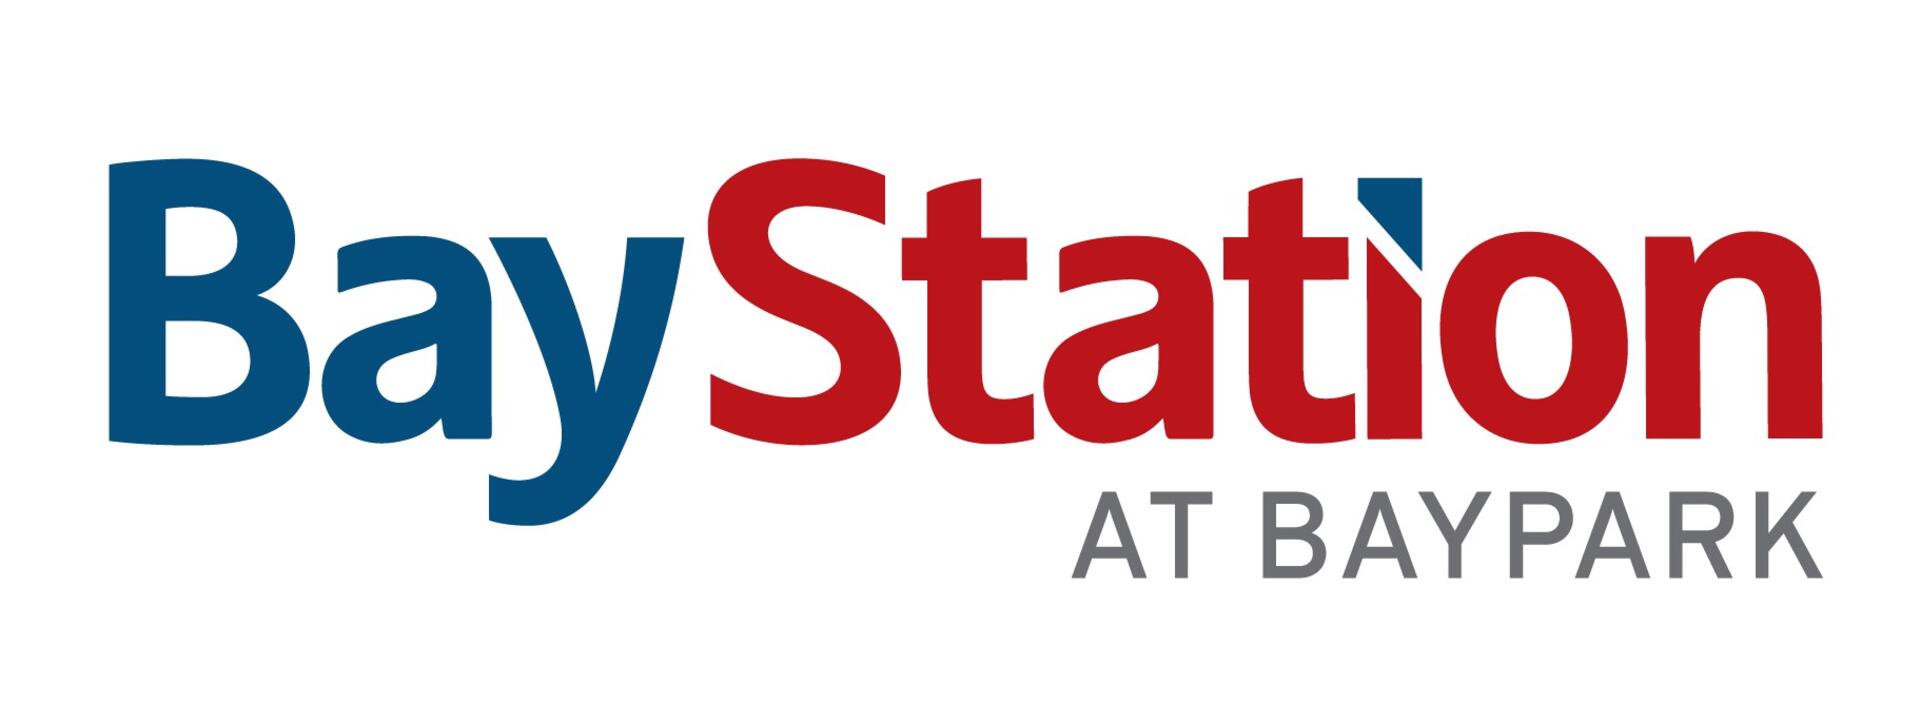 BayStation_Logo.jpg